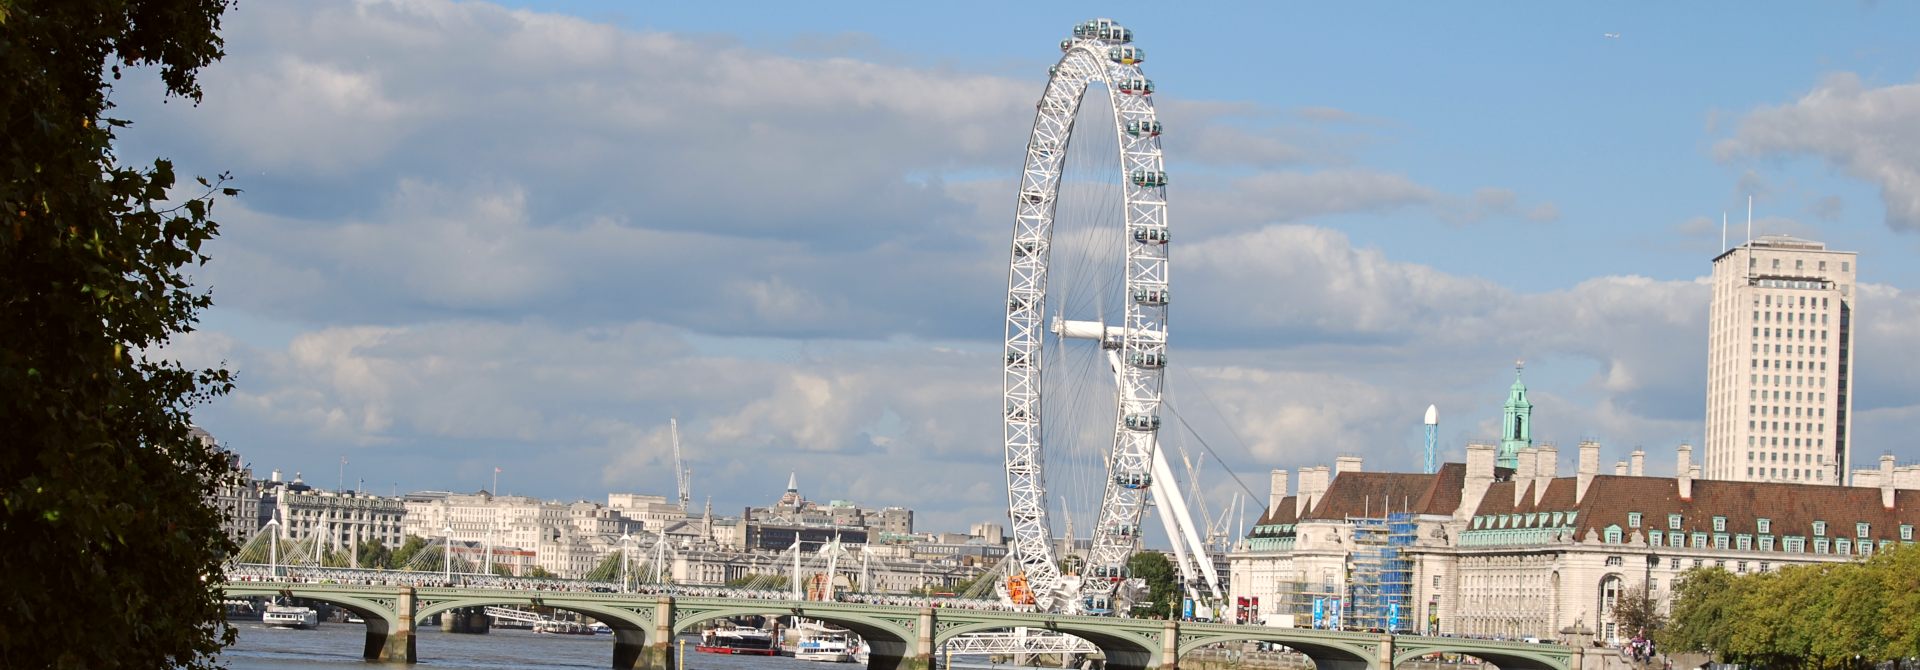 London Eye Header